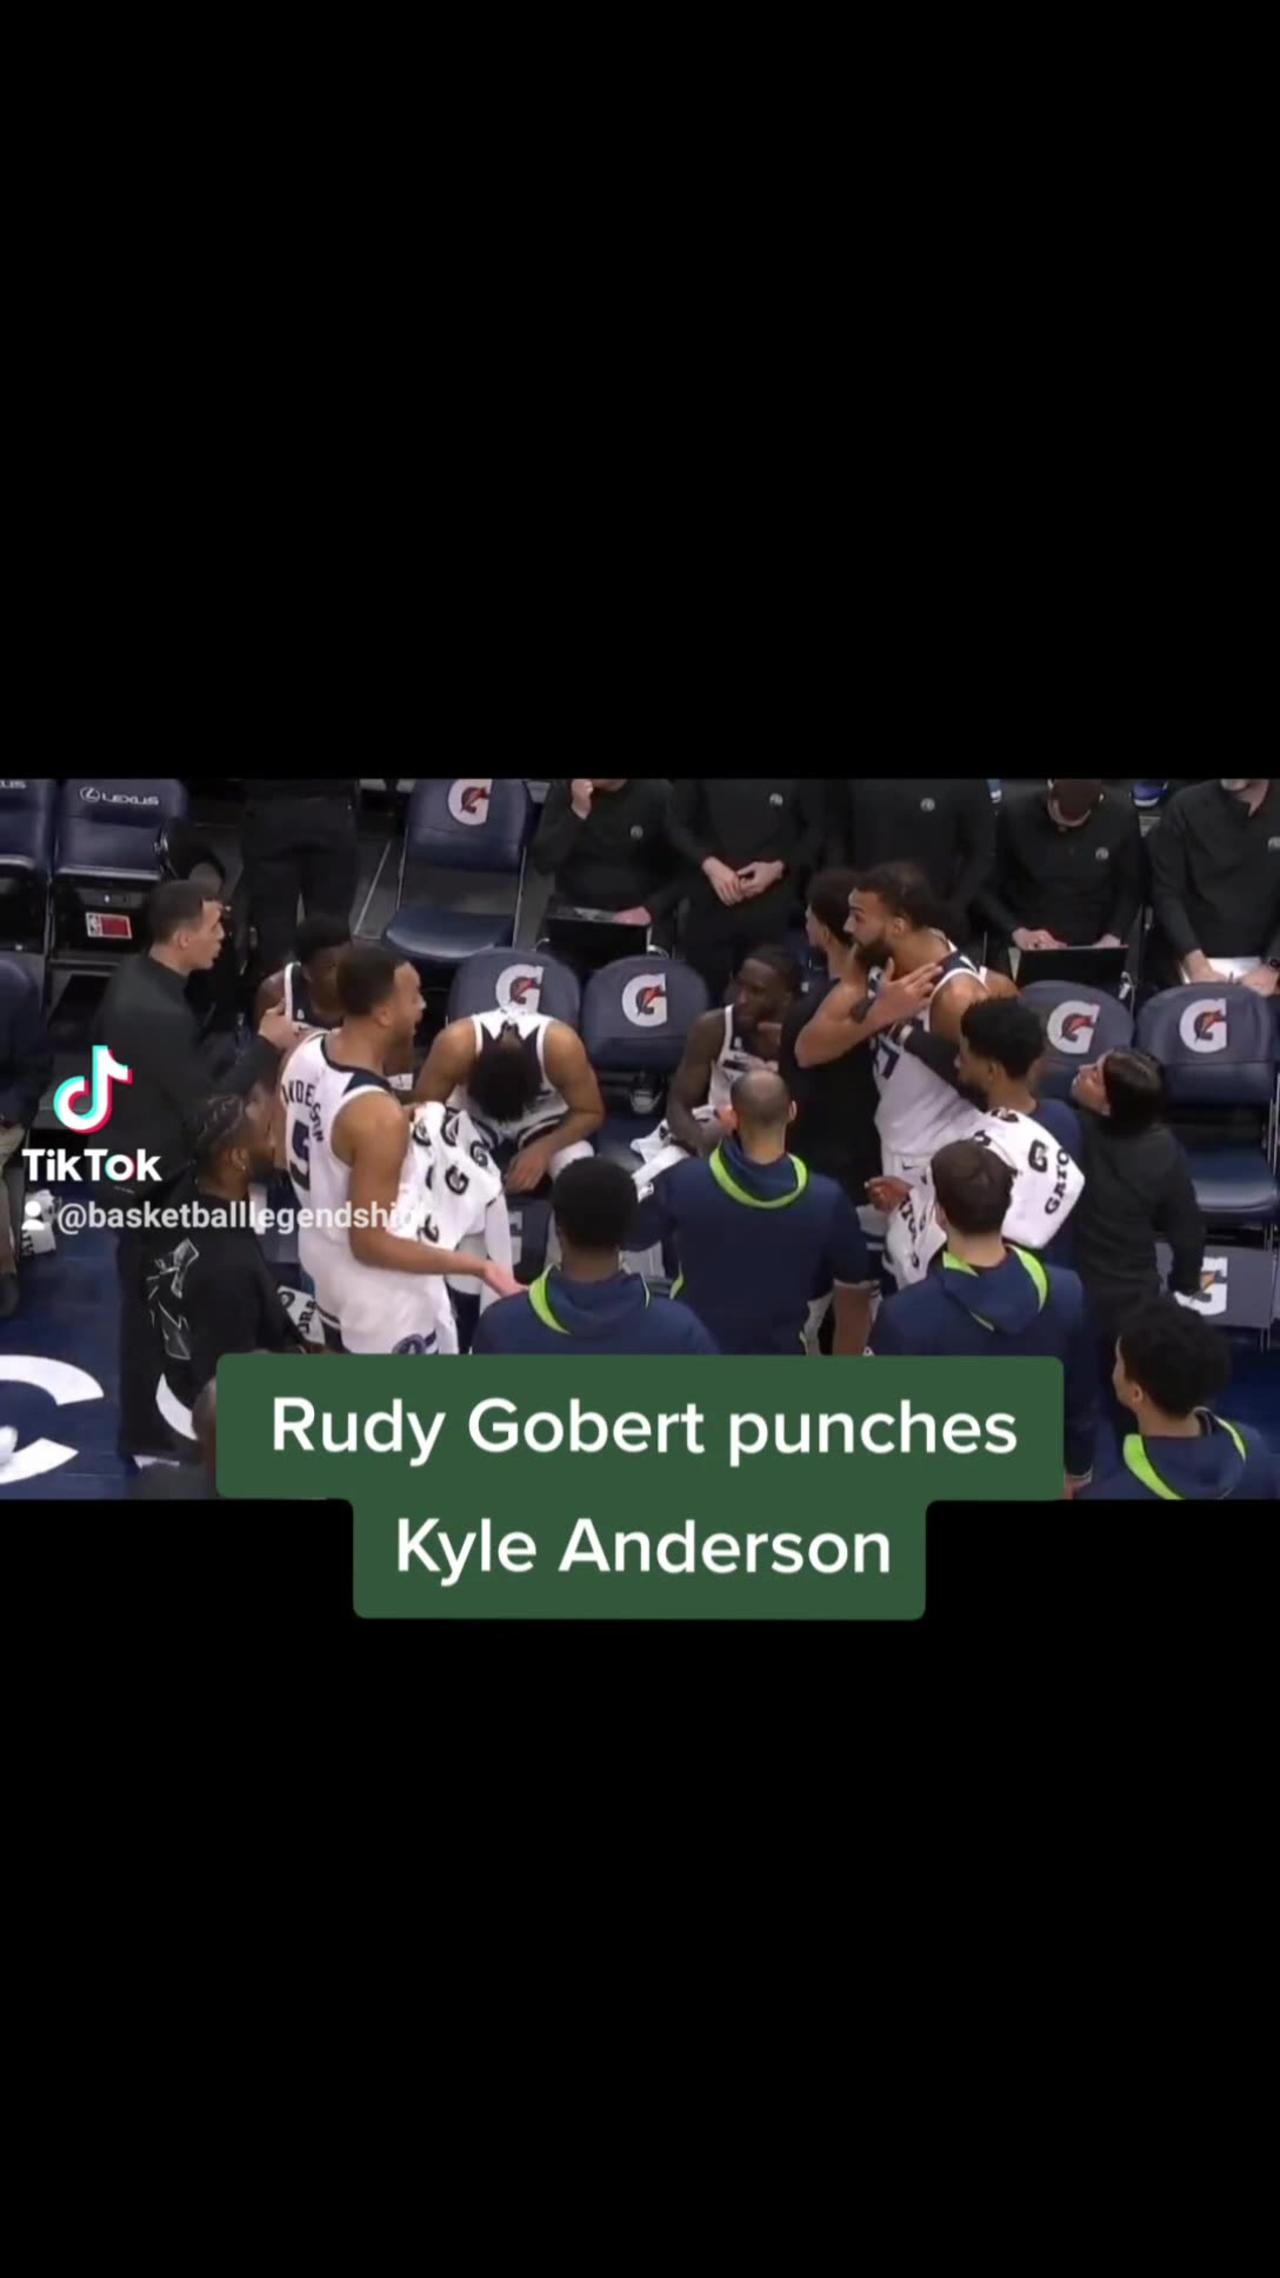 Rudy Gobert punches Kyle Anderson  #nba #basketball #rudygobert #kyleanderson #minnesotatimberwolves